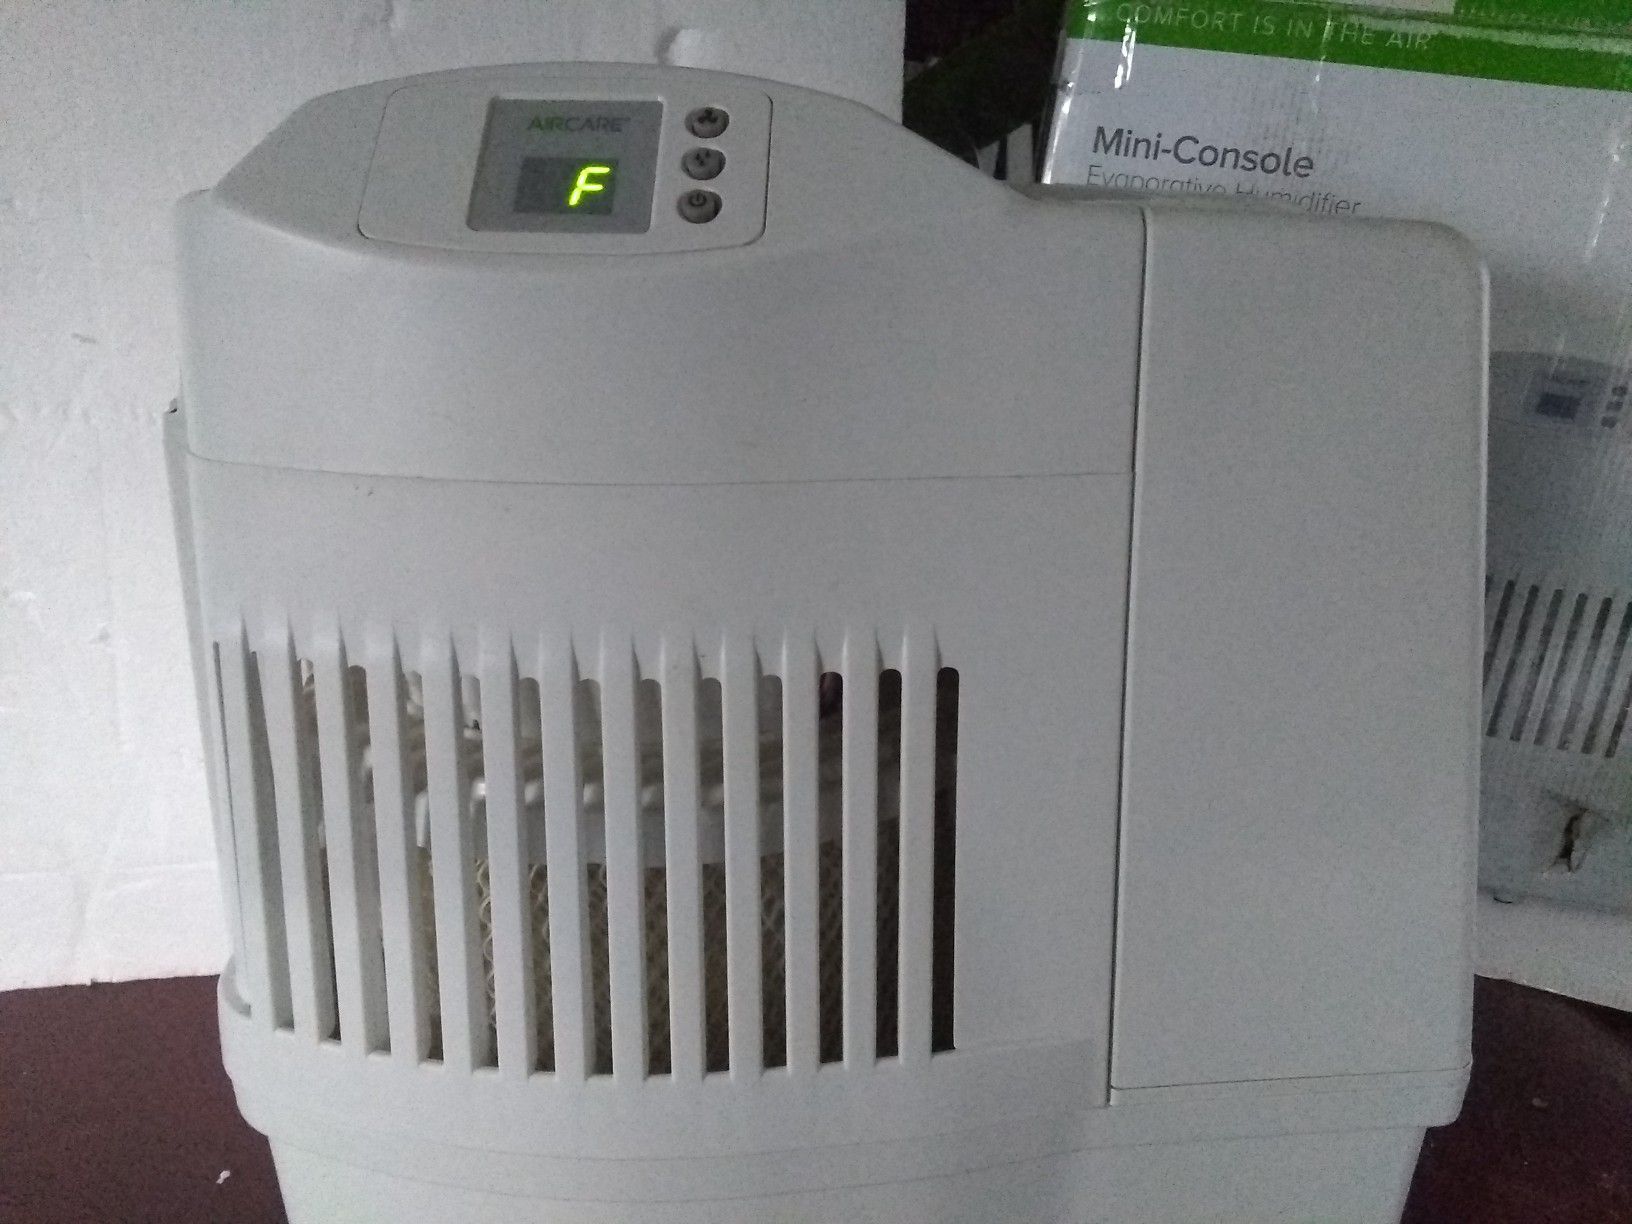 Evaporative humidifier